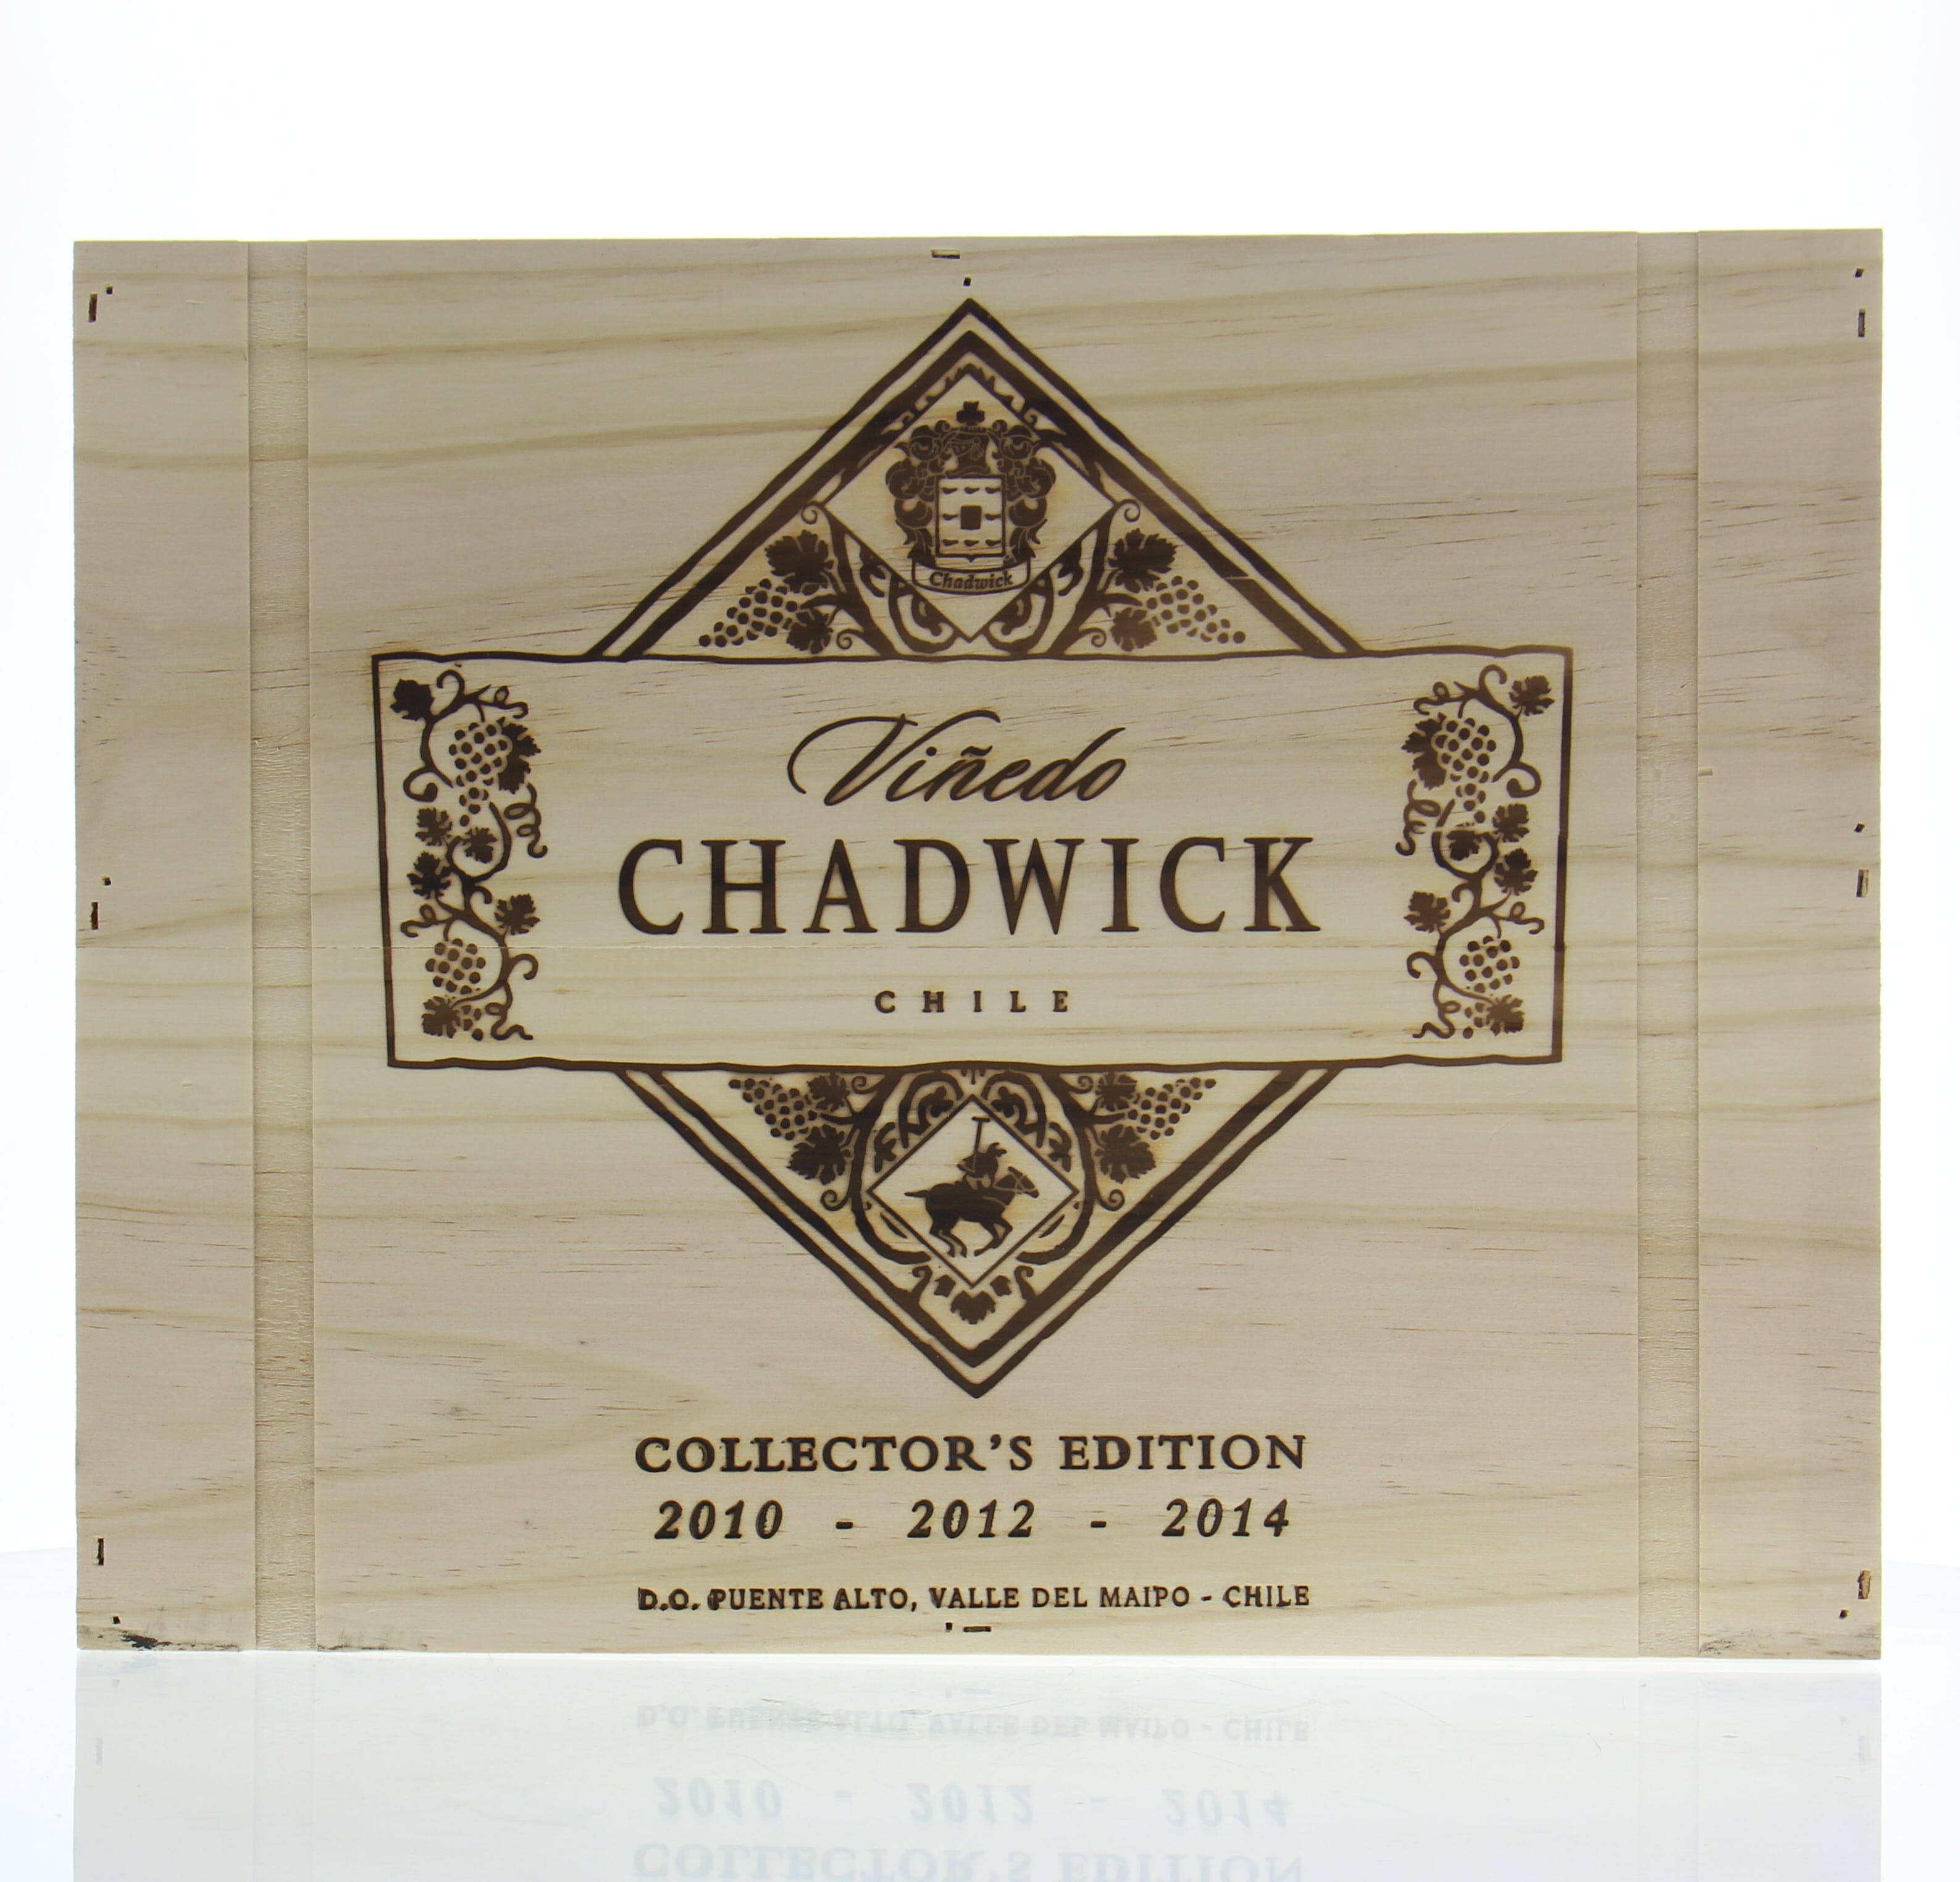 Vinedo Chadwick - Collector's Edition 2010-2012-2014 2014 Perfect